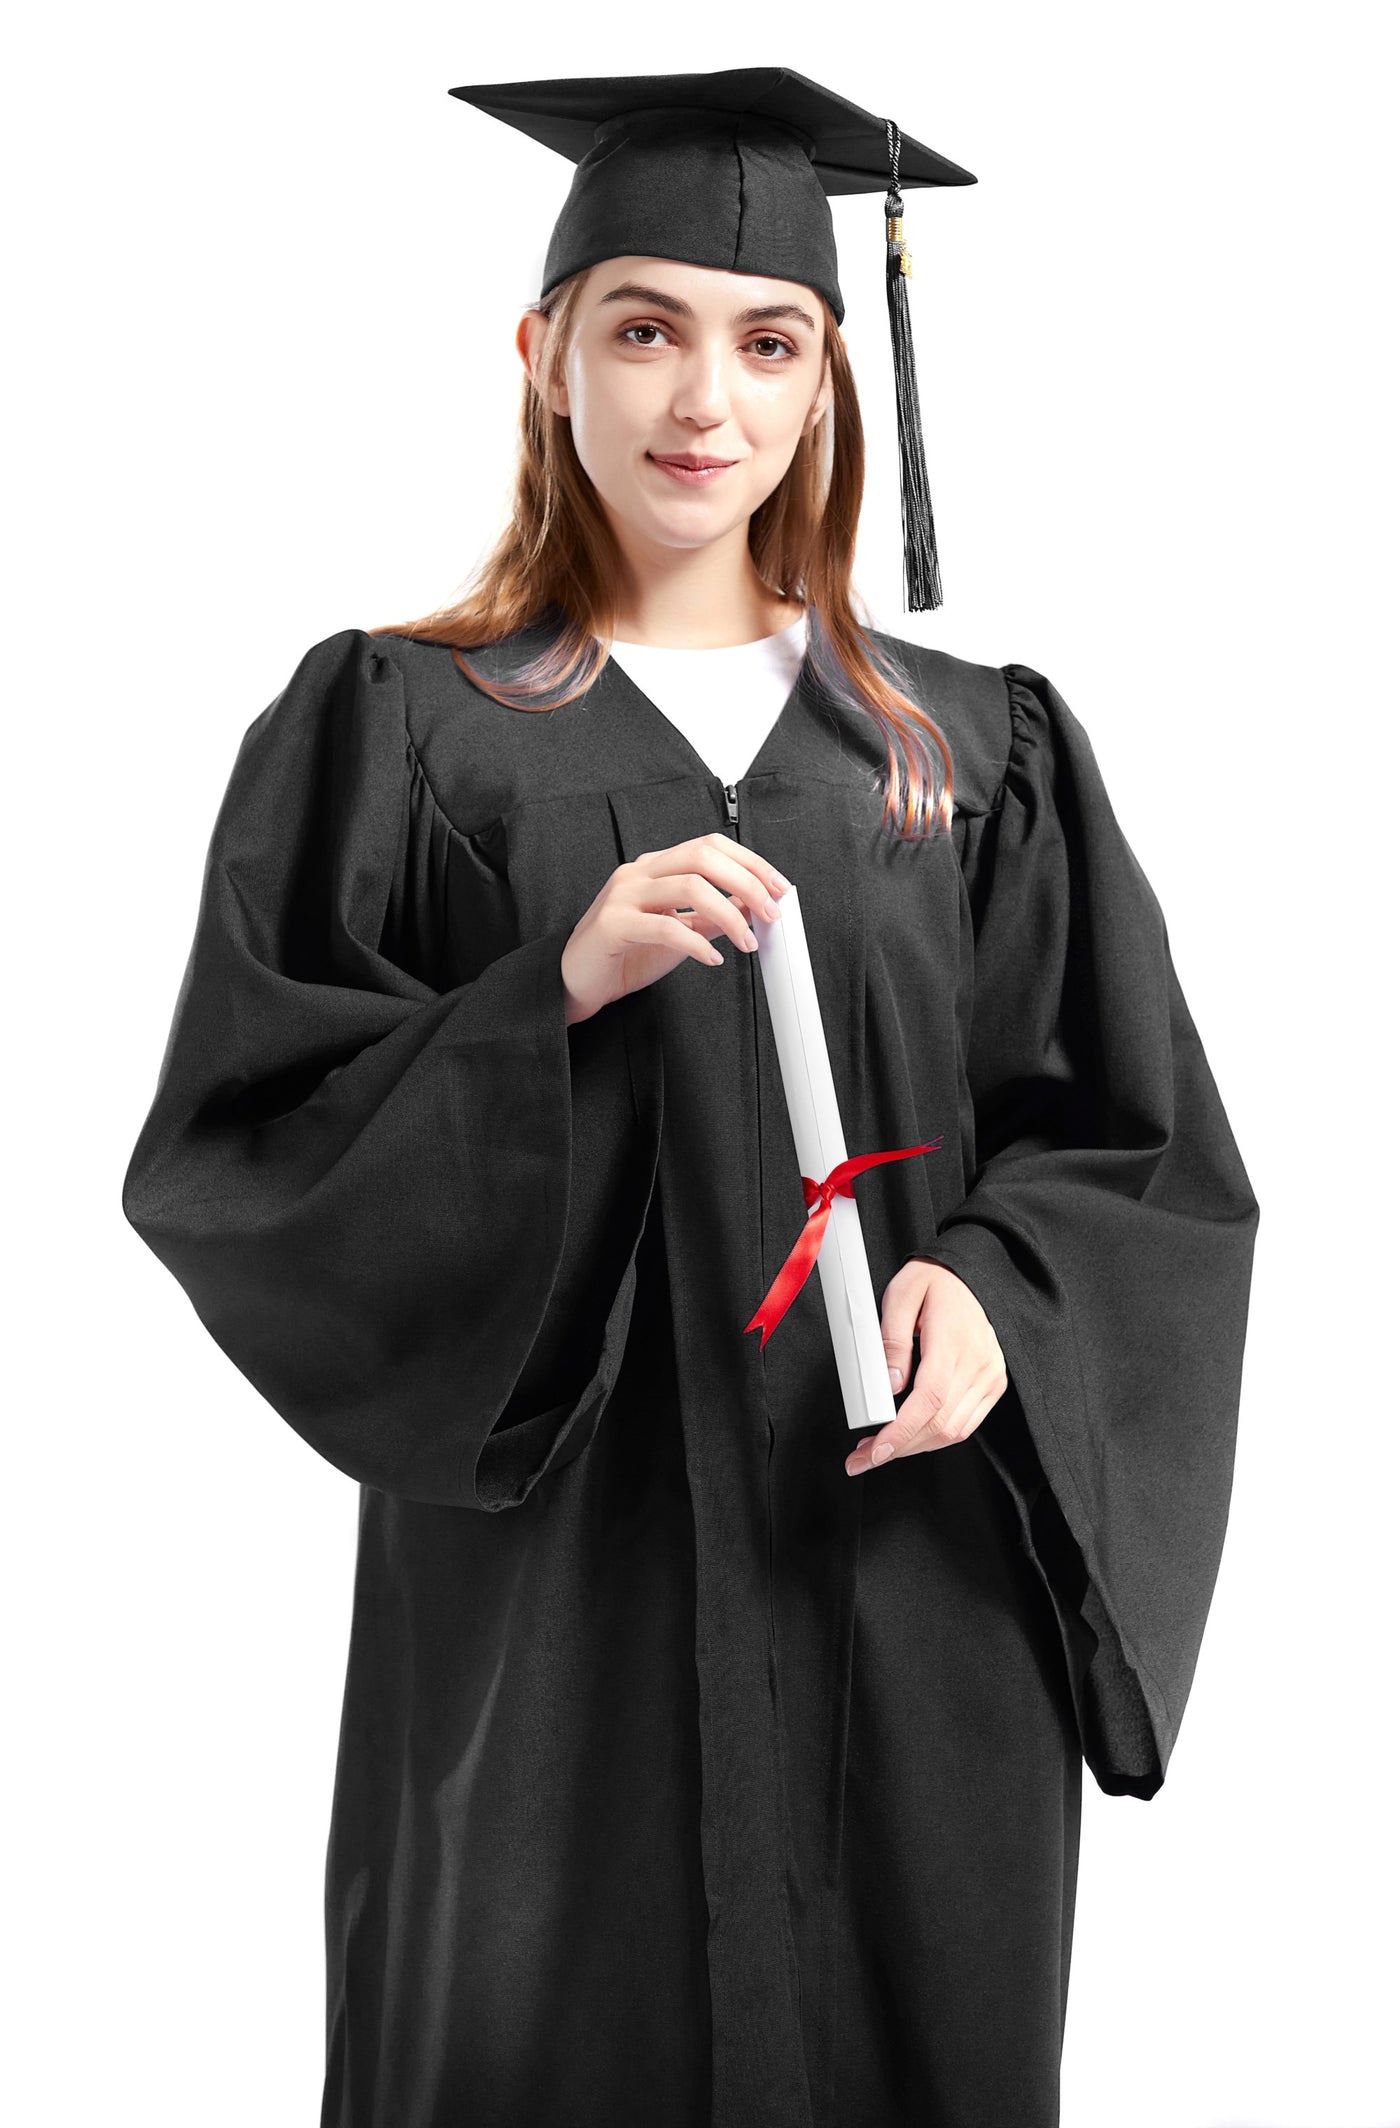 Classic Doctoral Graduation Gown & Hood Package – Graduation Attire